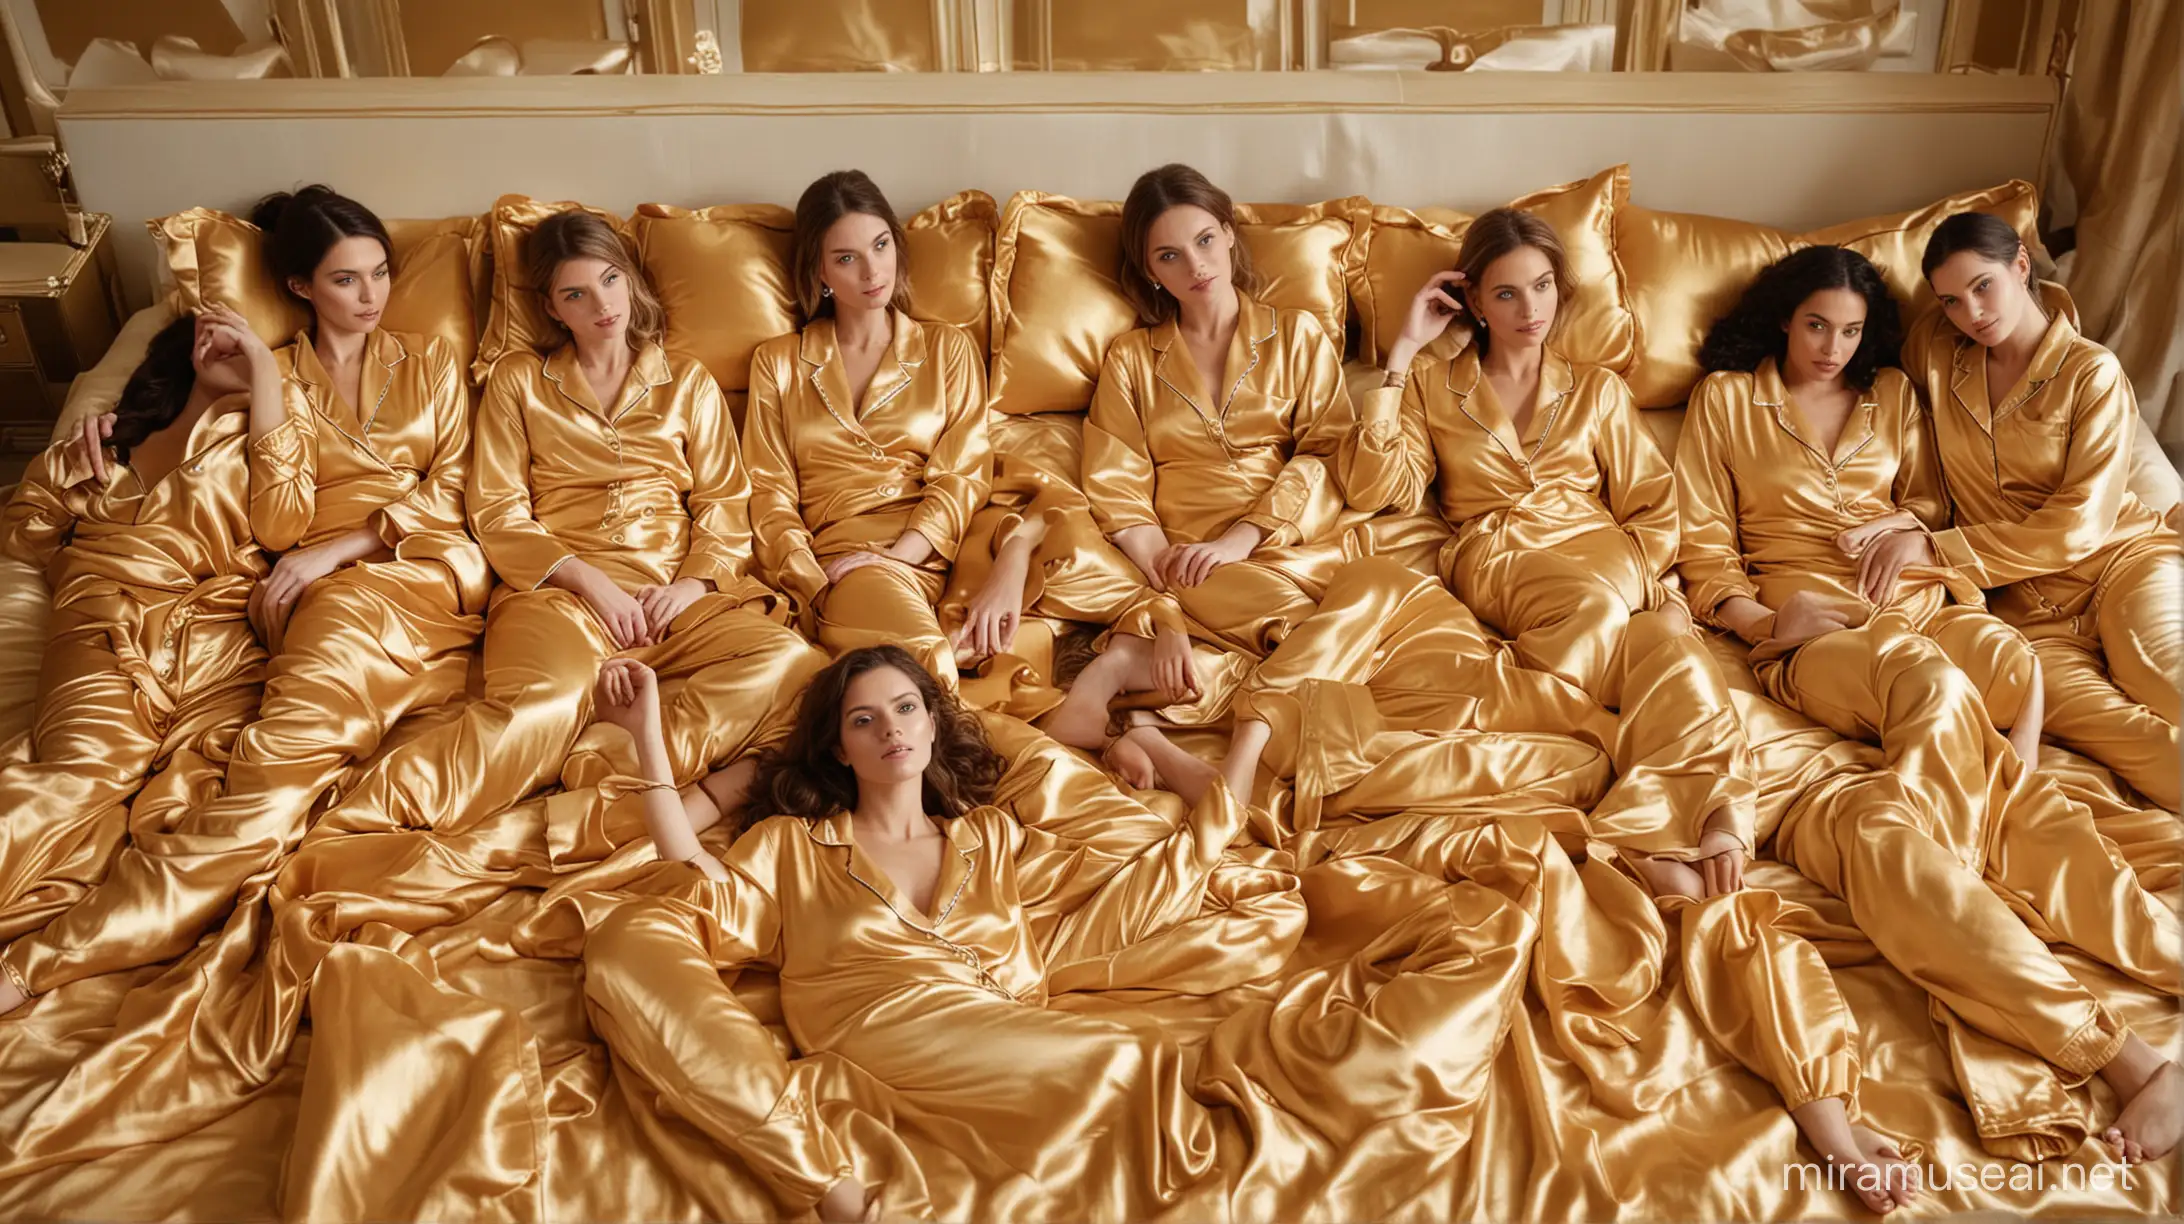 Luxurious Golden Slumber 50 Women in Satin Pajamas